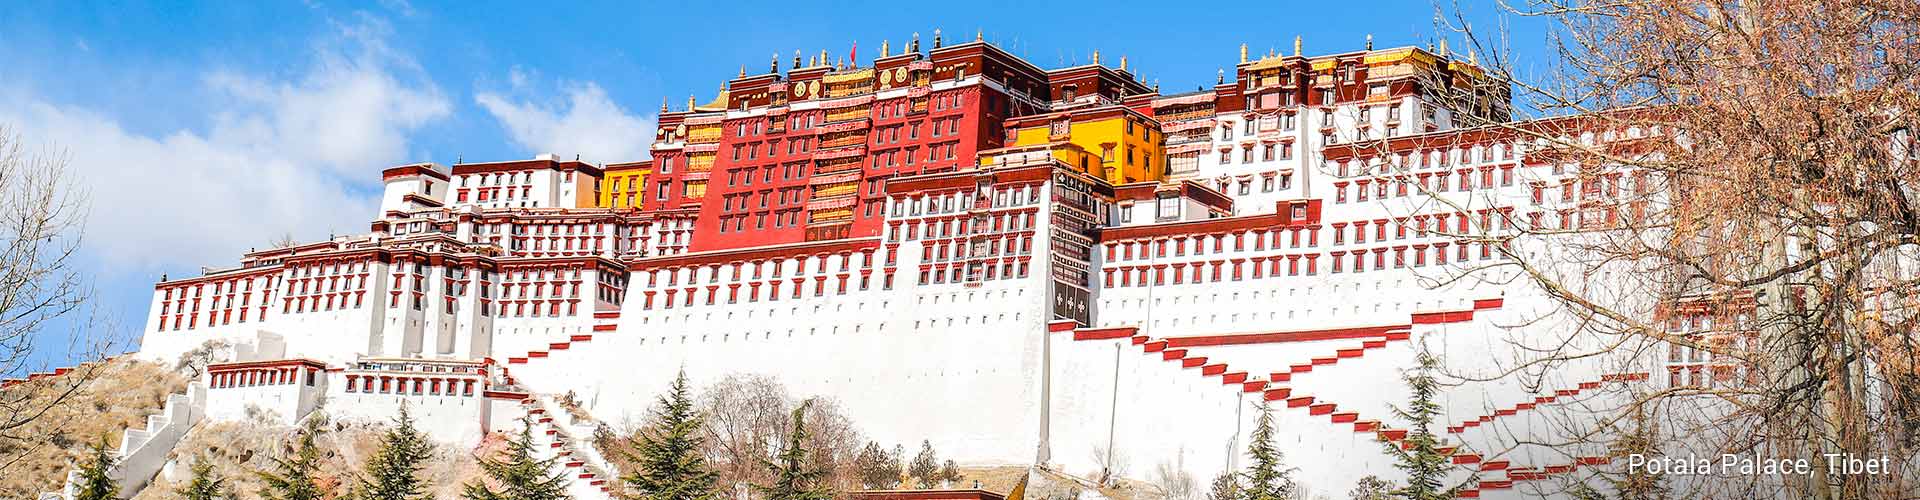 China Tibet Nepal Tours